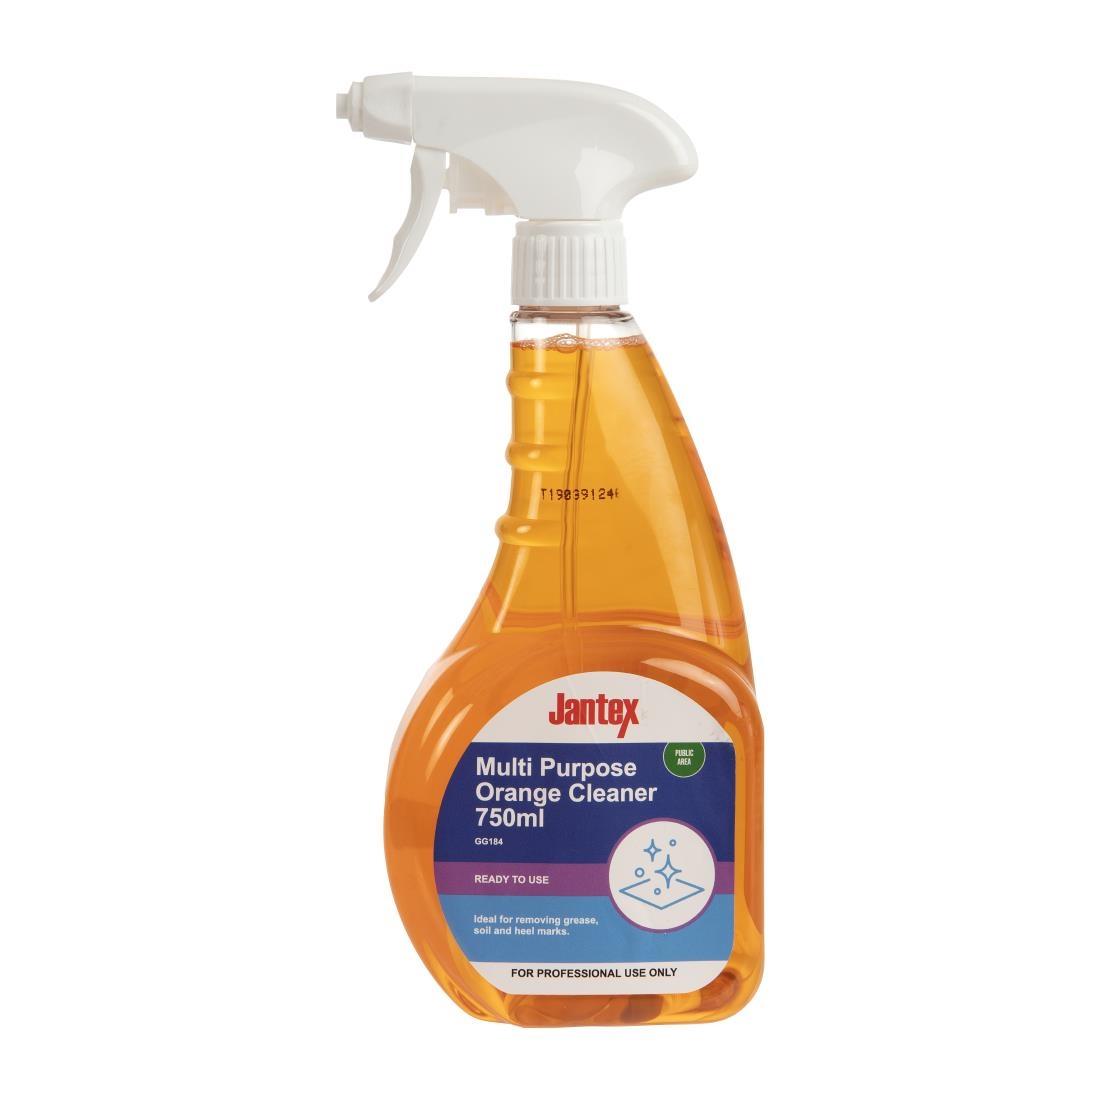 Jantex Citrus Multi-Purpose Cleaner Ready To Use 750ml - GG184  - 1